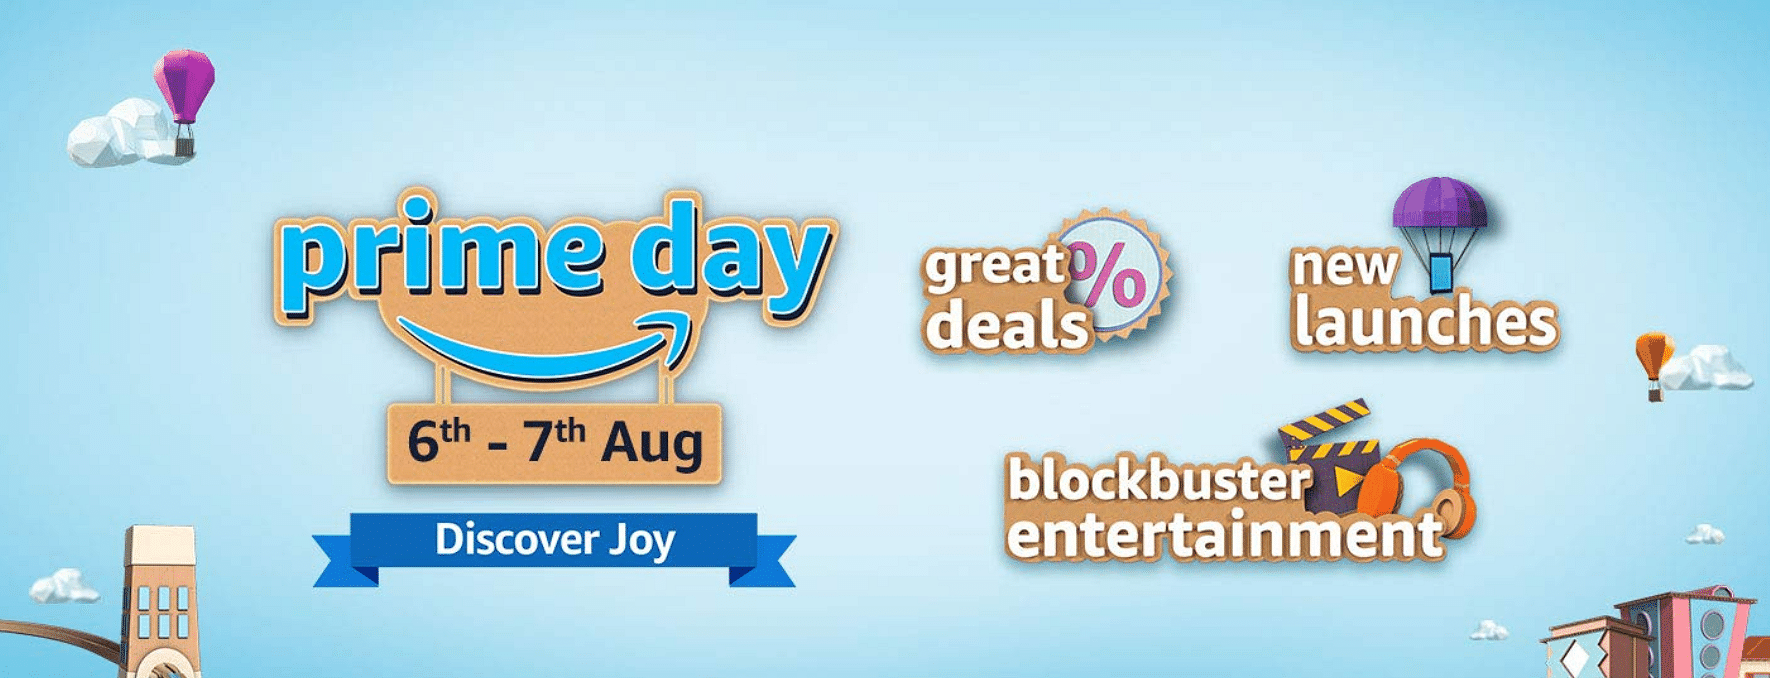 Amazon Prime Day sale website (screen-grab)